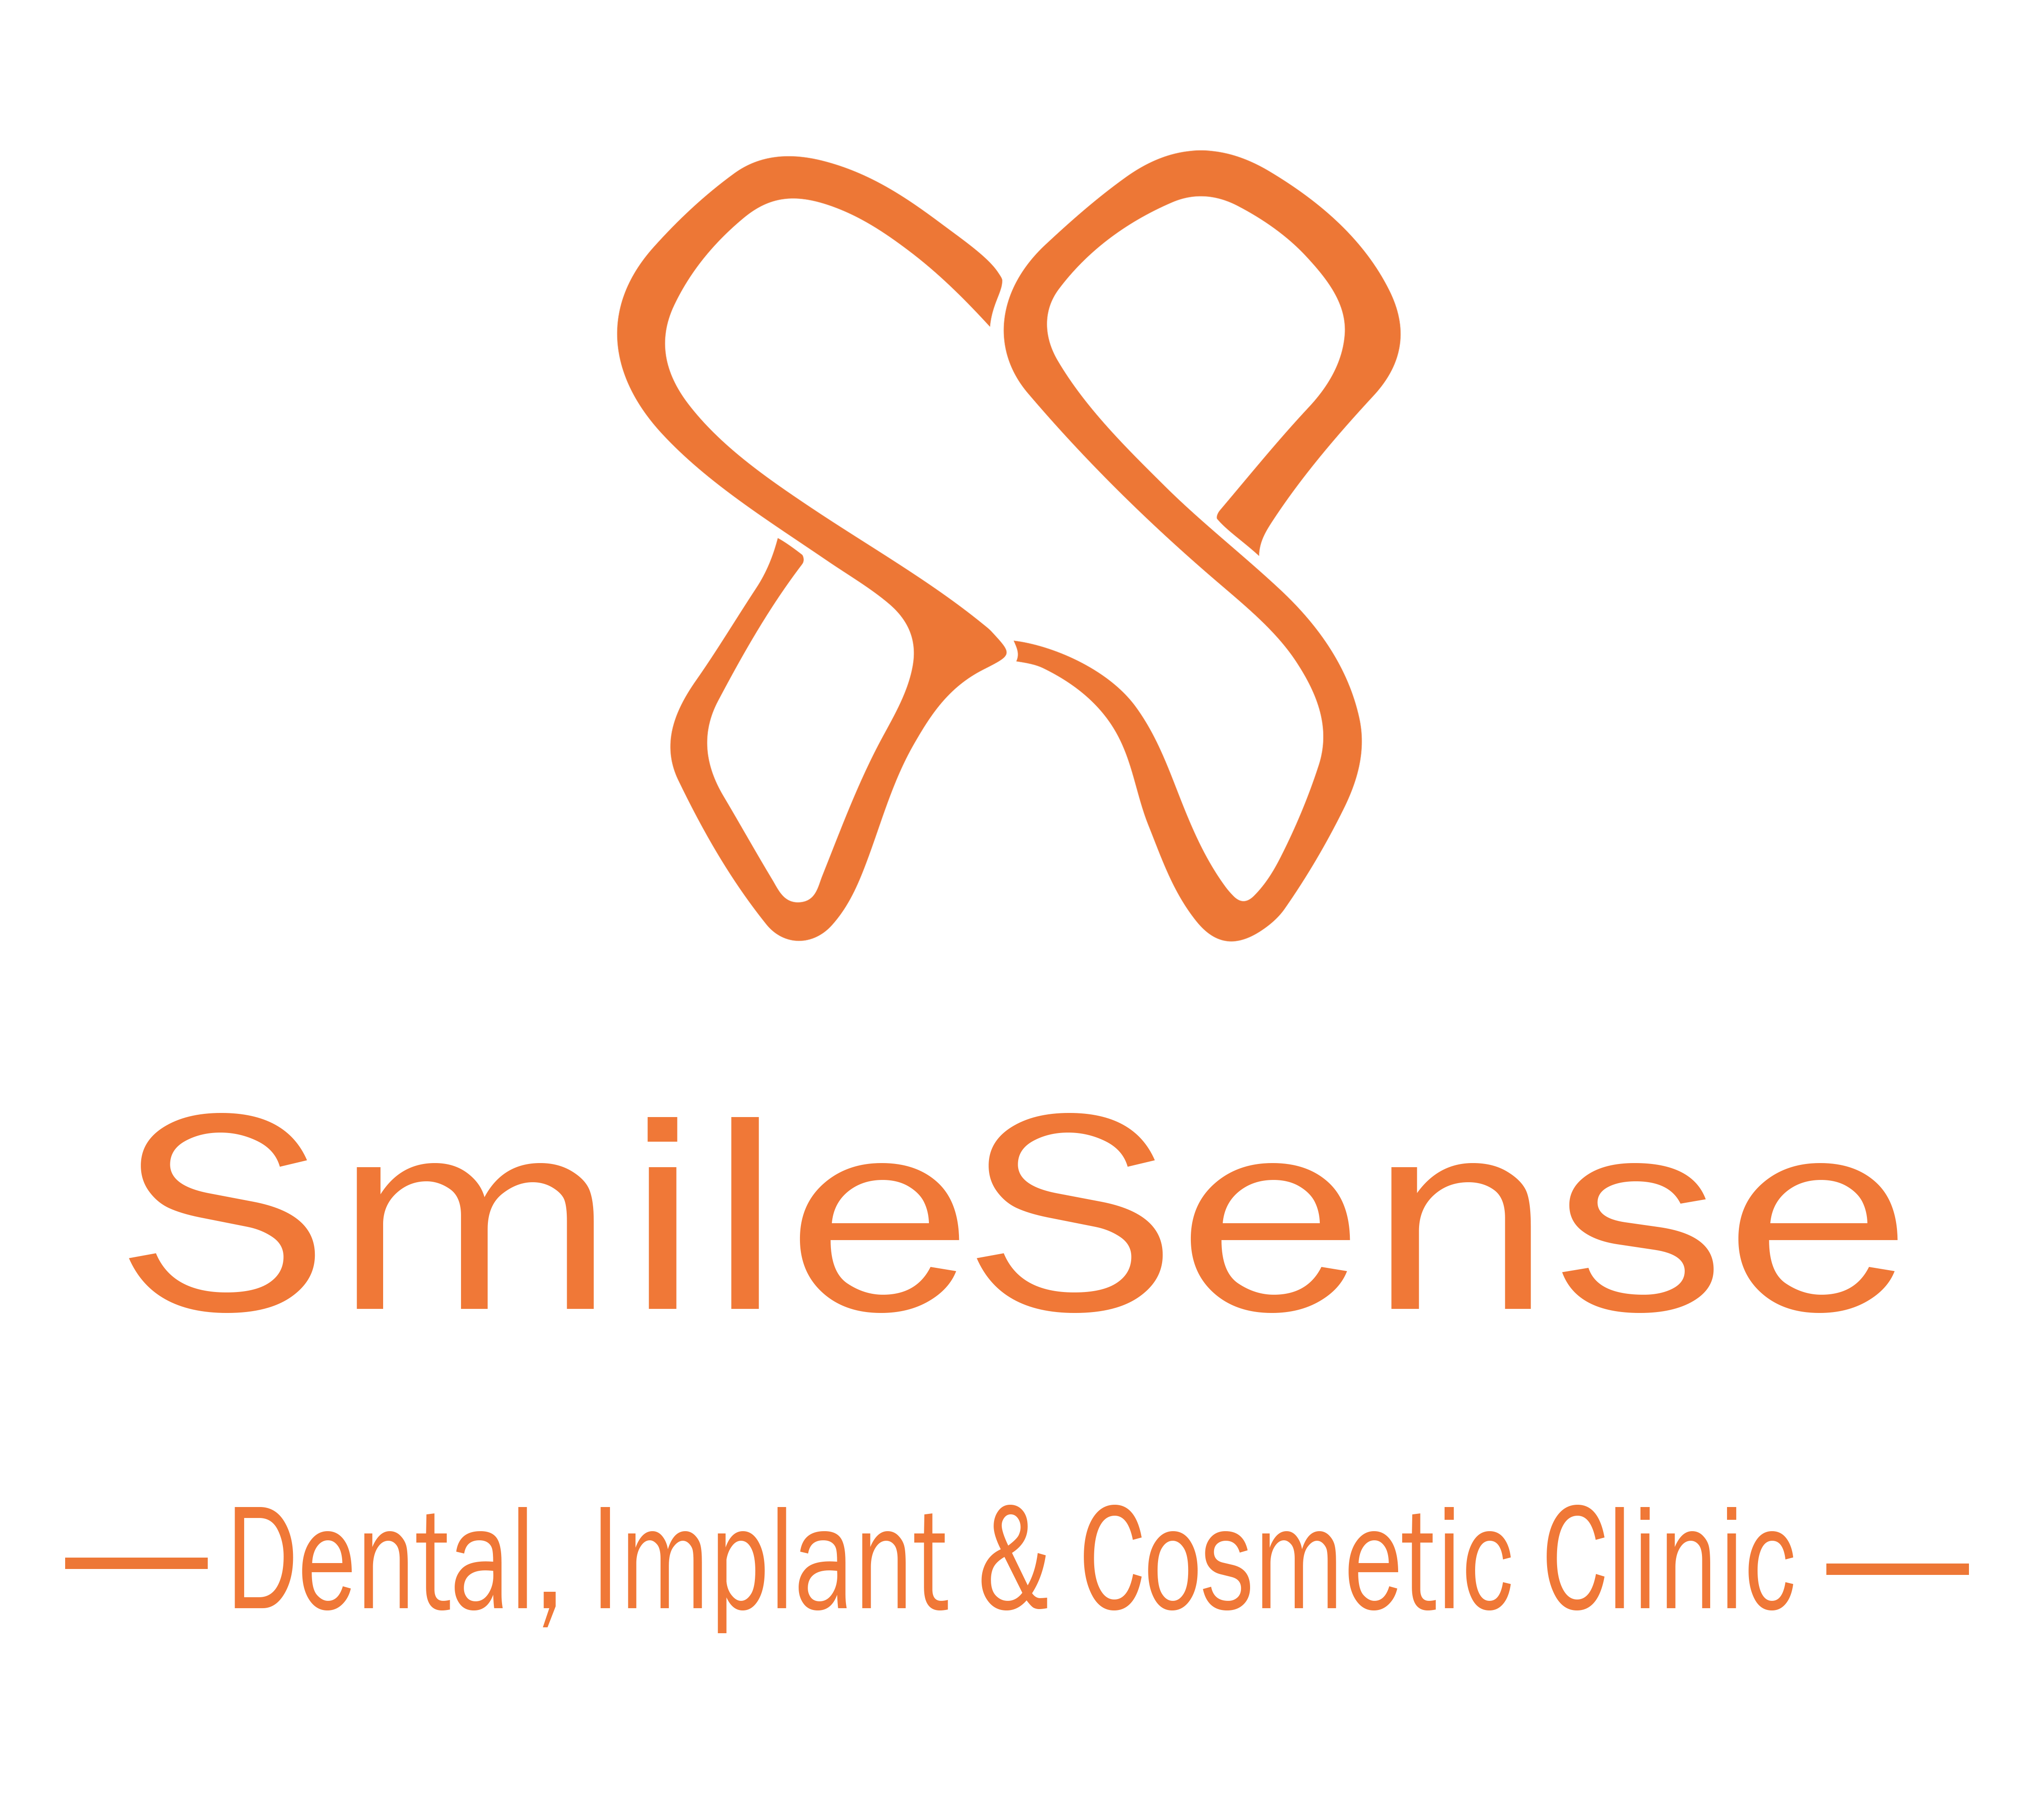 SmileSense Dental Clinic